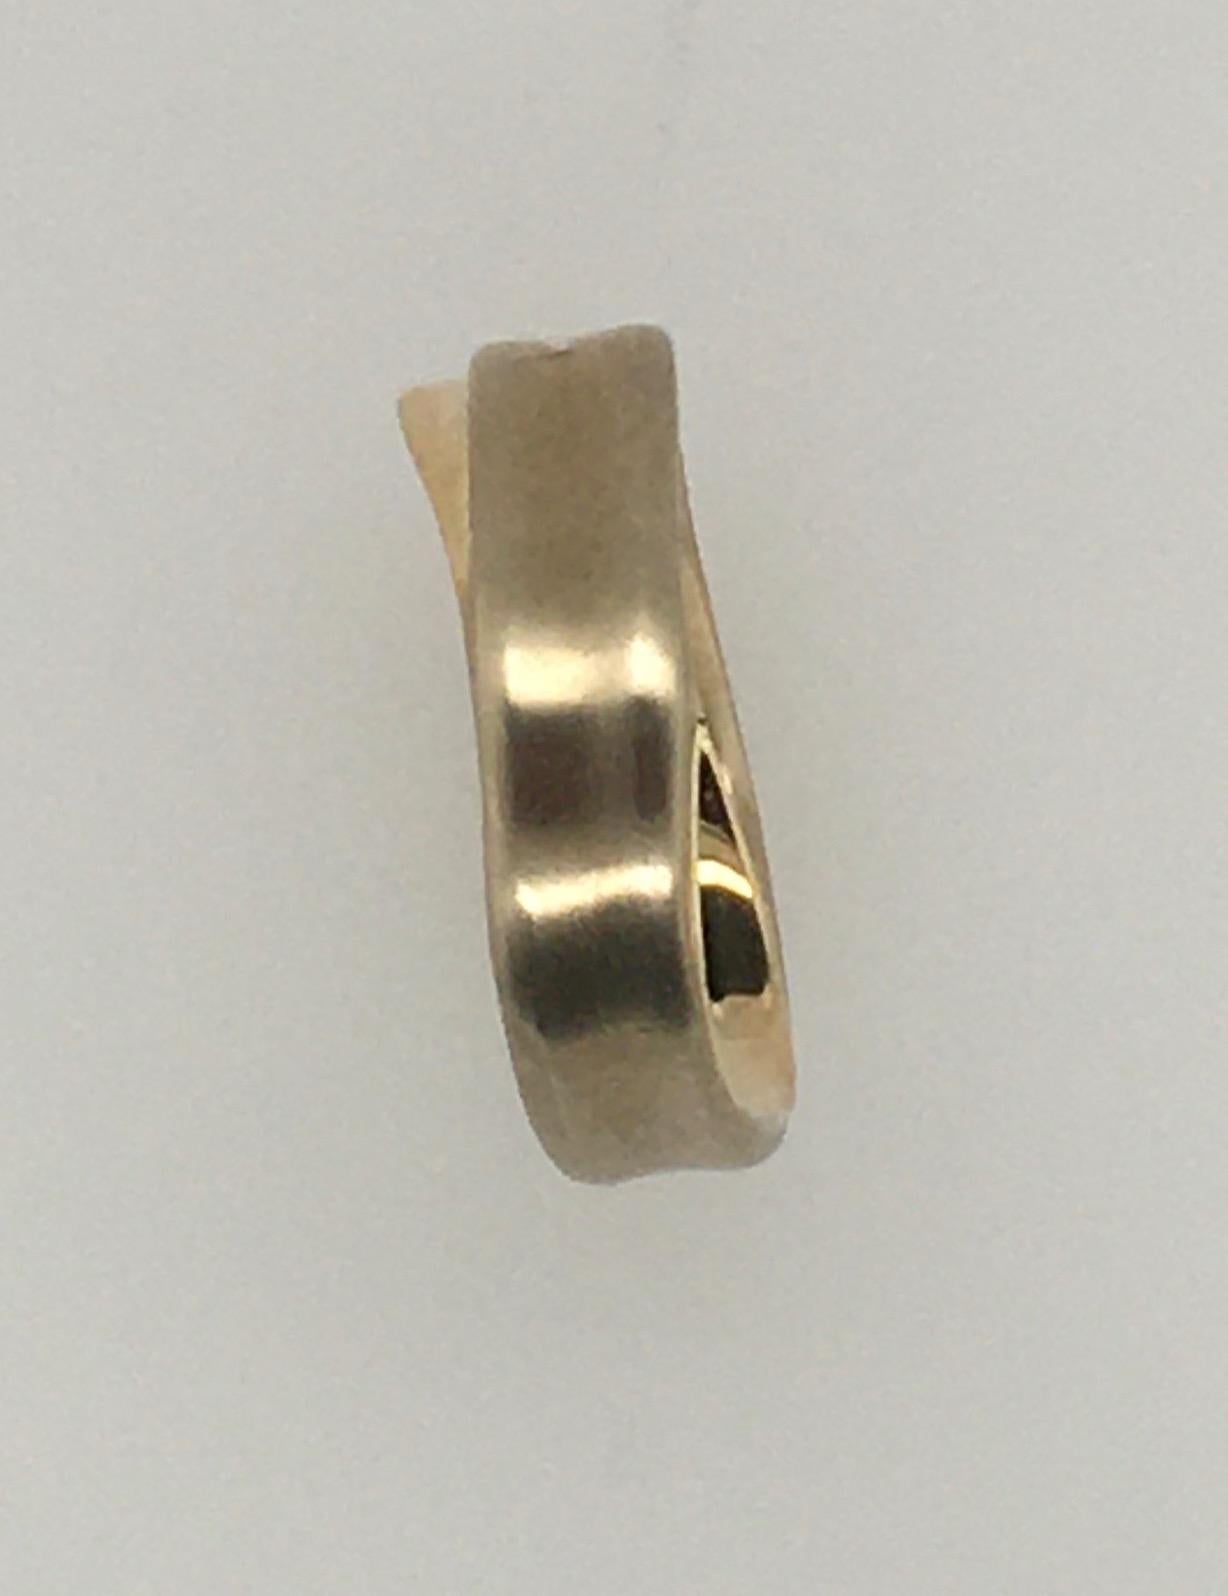 JENNIFER SHIGETOMI Stylized Gold Leaf & Vine Satin Finish Guinevere Ring In Excellent Condition For Sale In Kennebunkport, ME